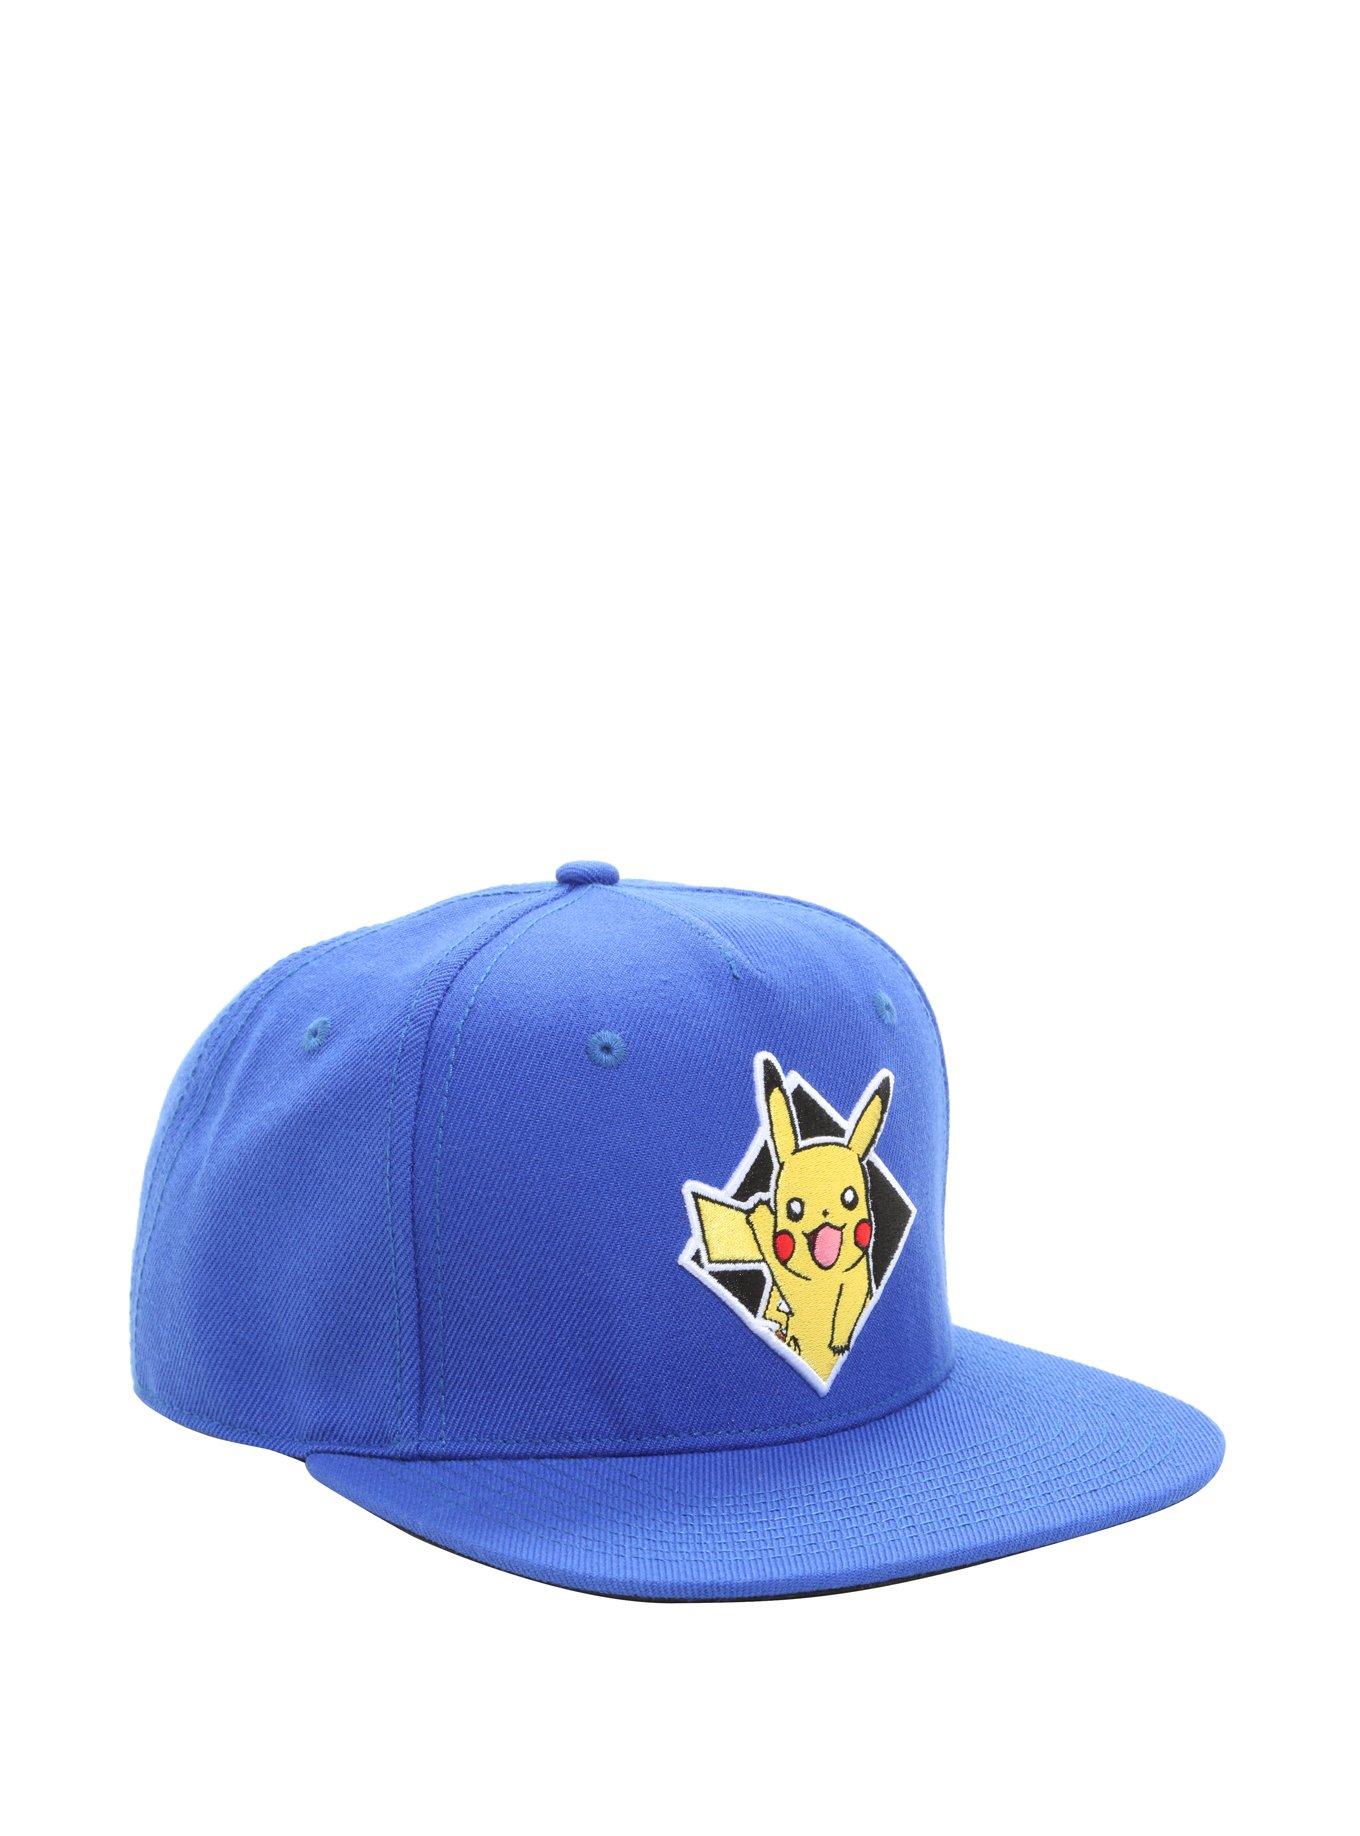 Pokémon Pikachu Snapback Hat, , hi-res